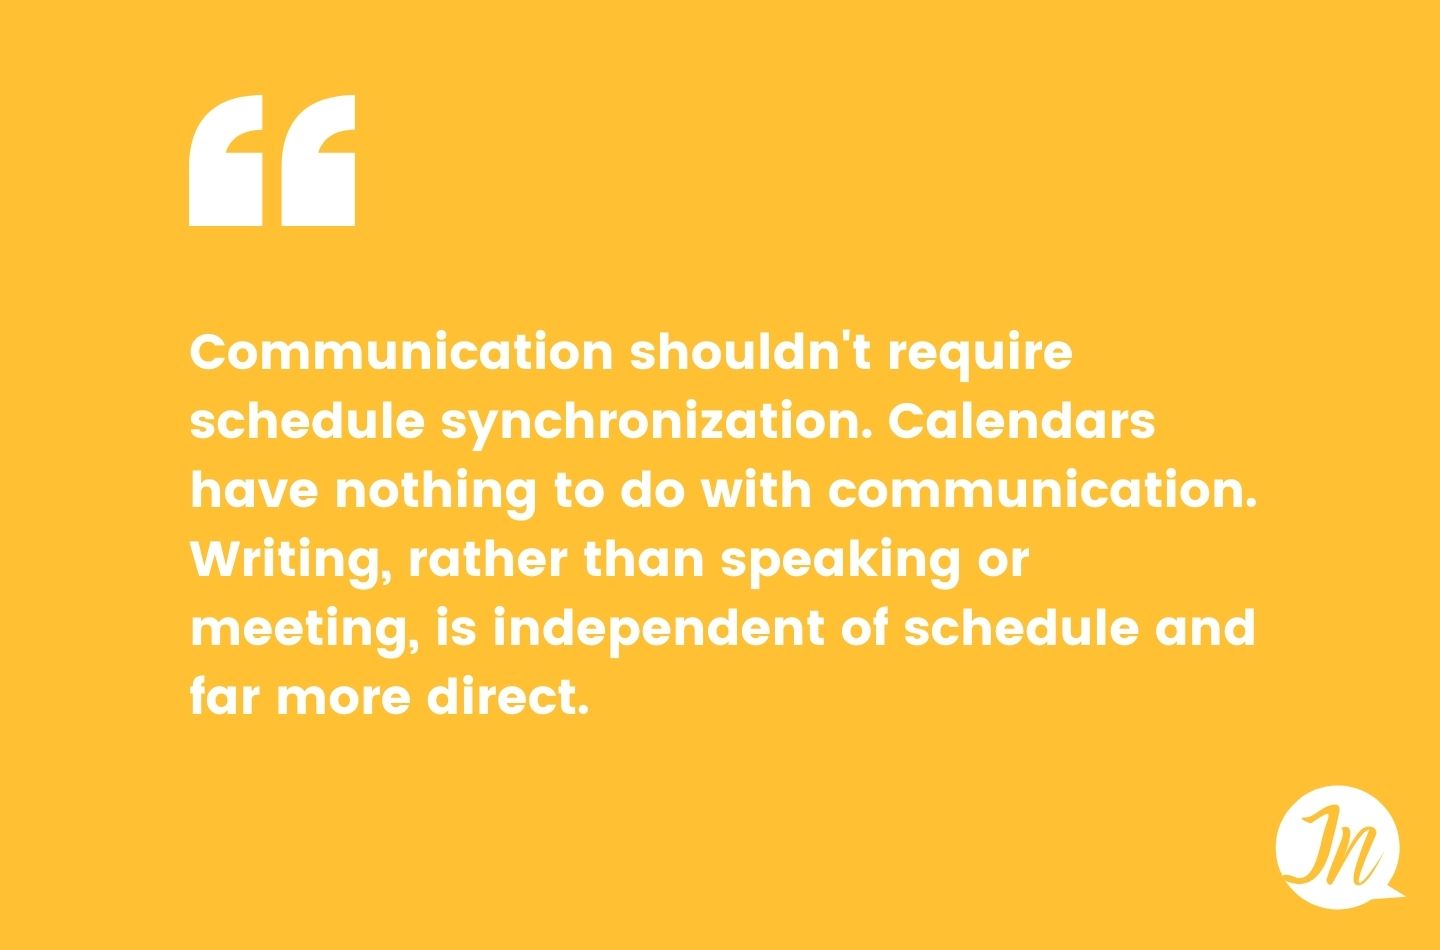 Communication shouldn't require schedule synchronization.